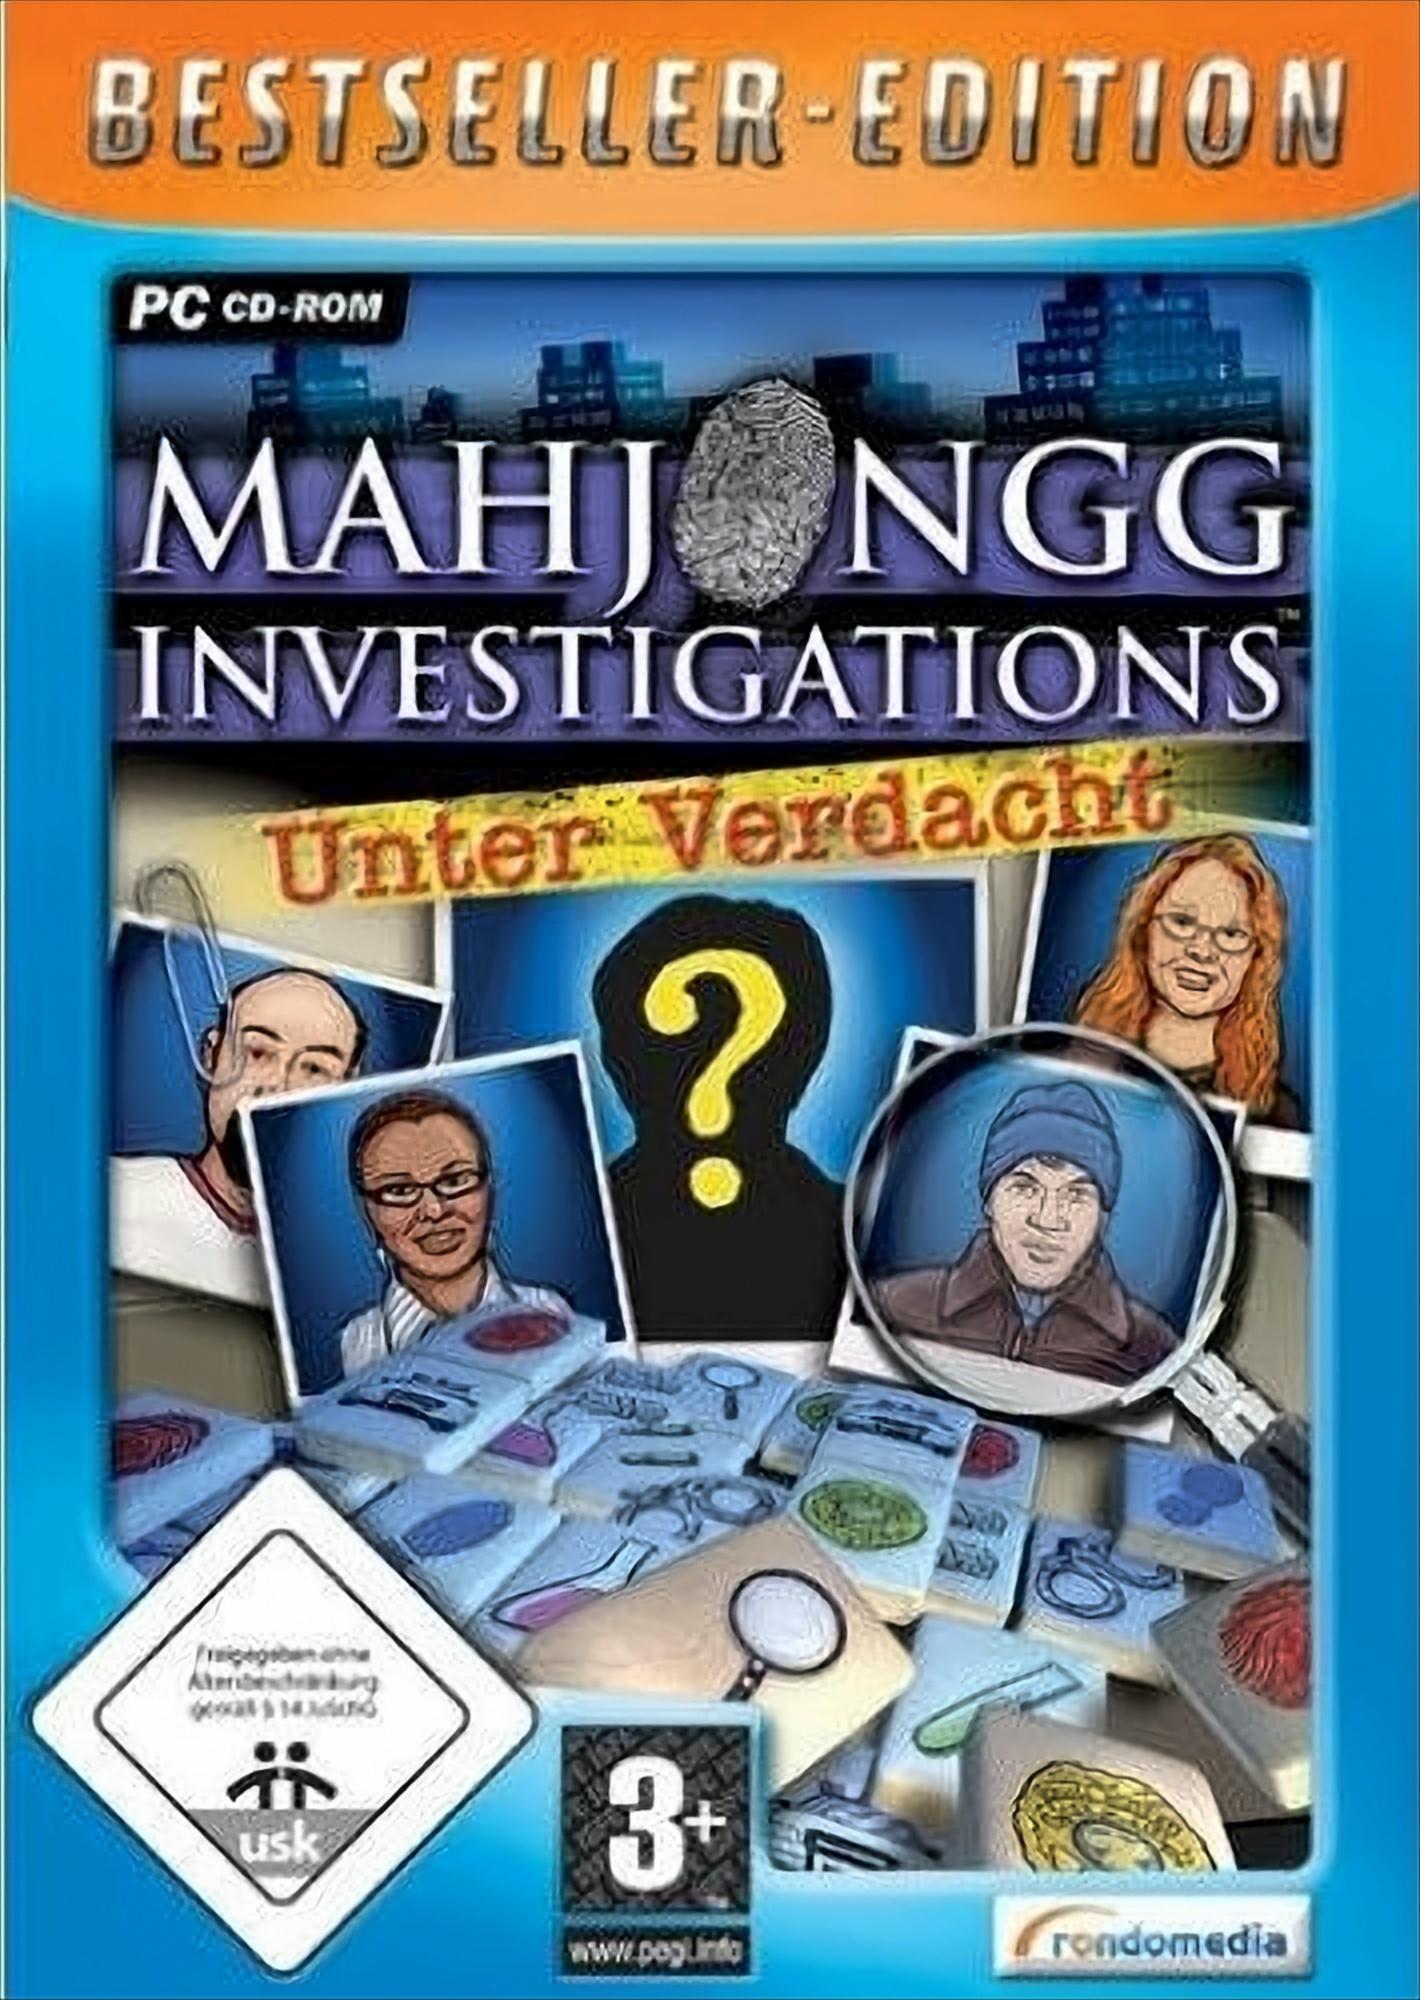 [PC] Verdacht - Unter - Mahjongg Investigations